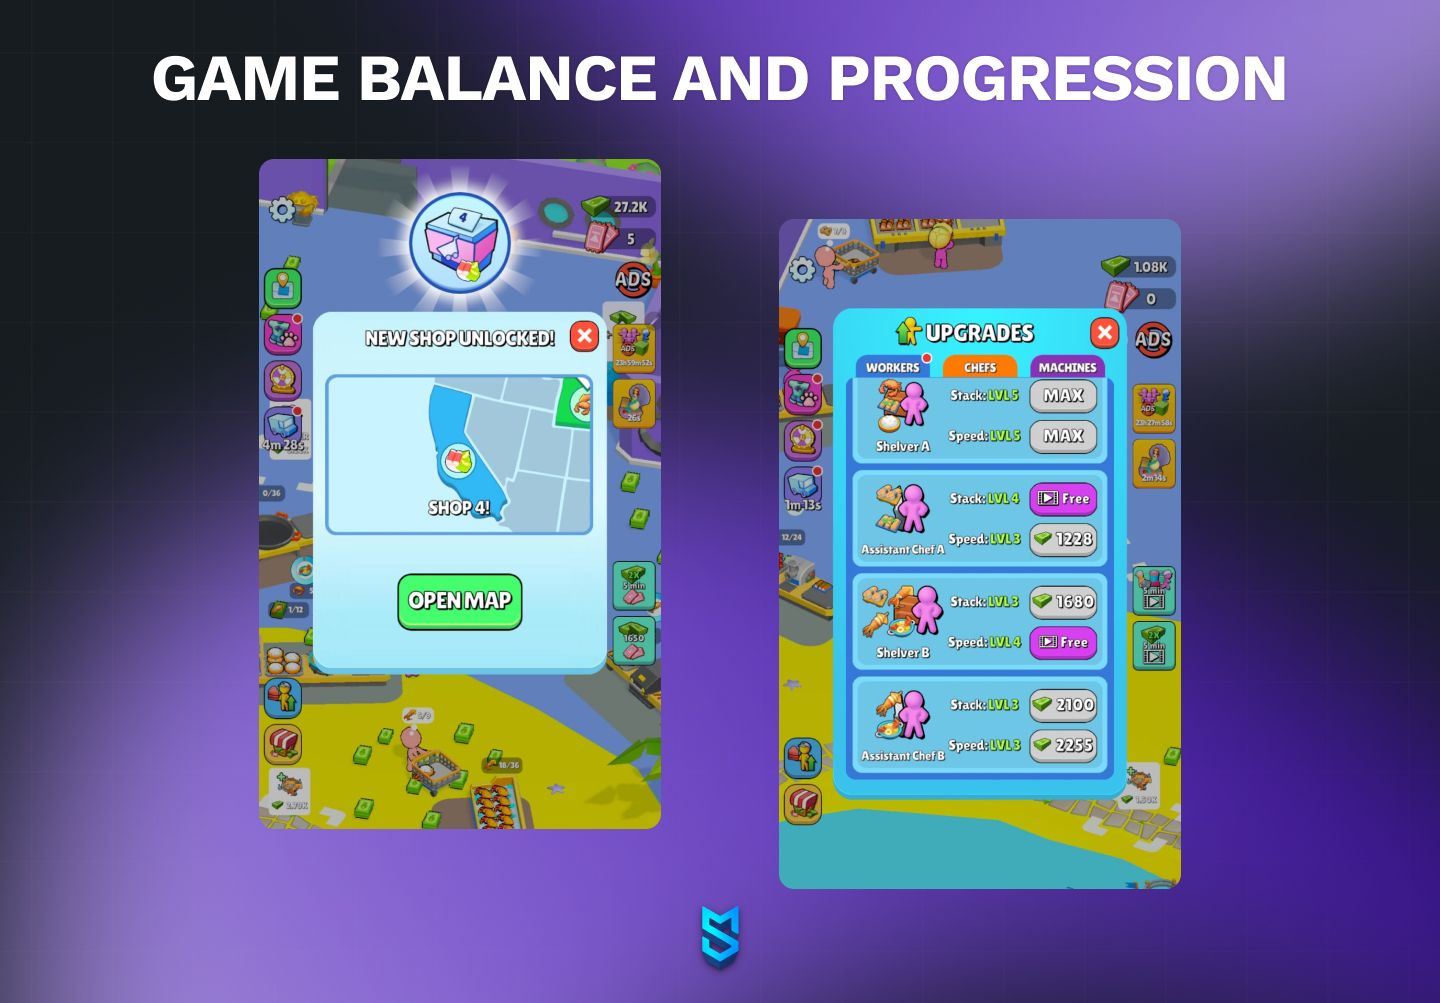 Game balance and progression